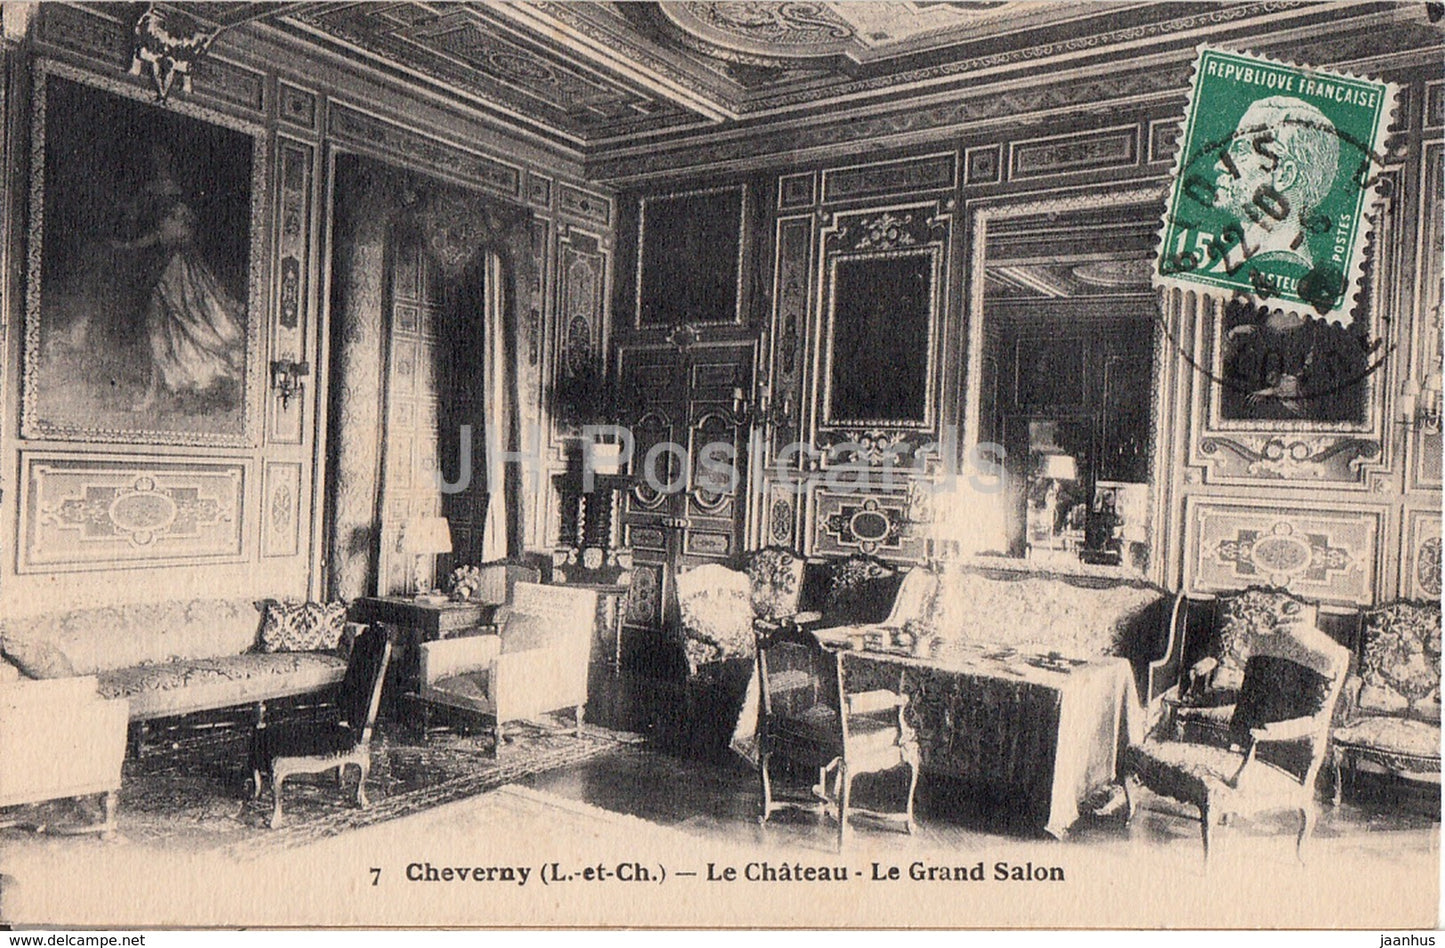 Cheverny - Le Chateau - Le Grand Salon - 7 - castle - old postcard - France - used